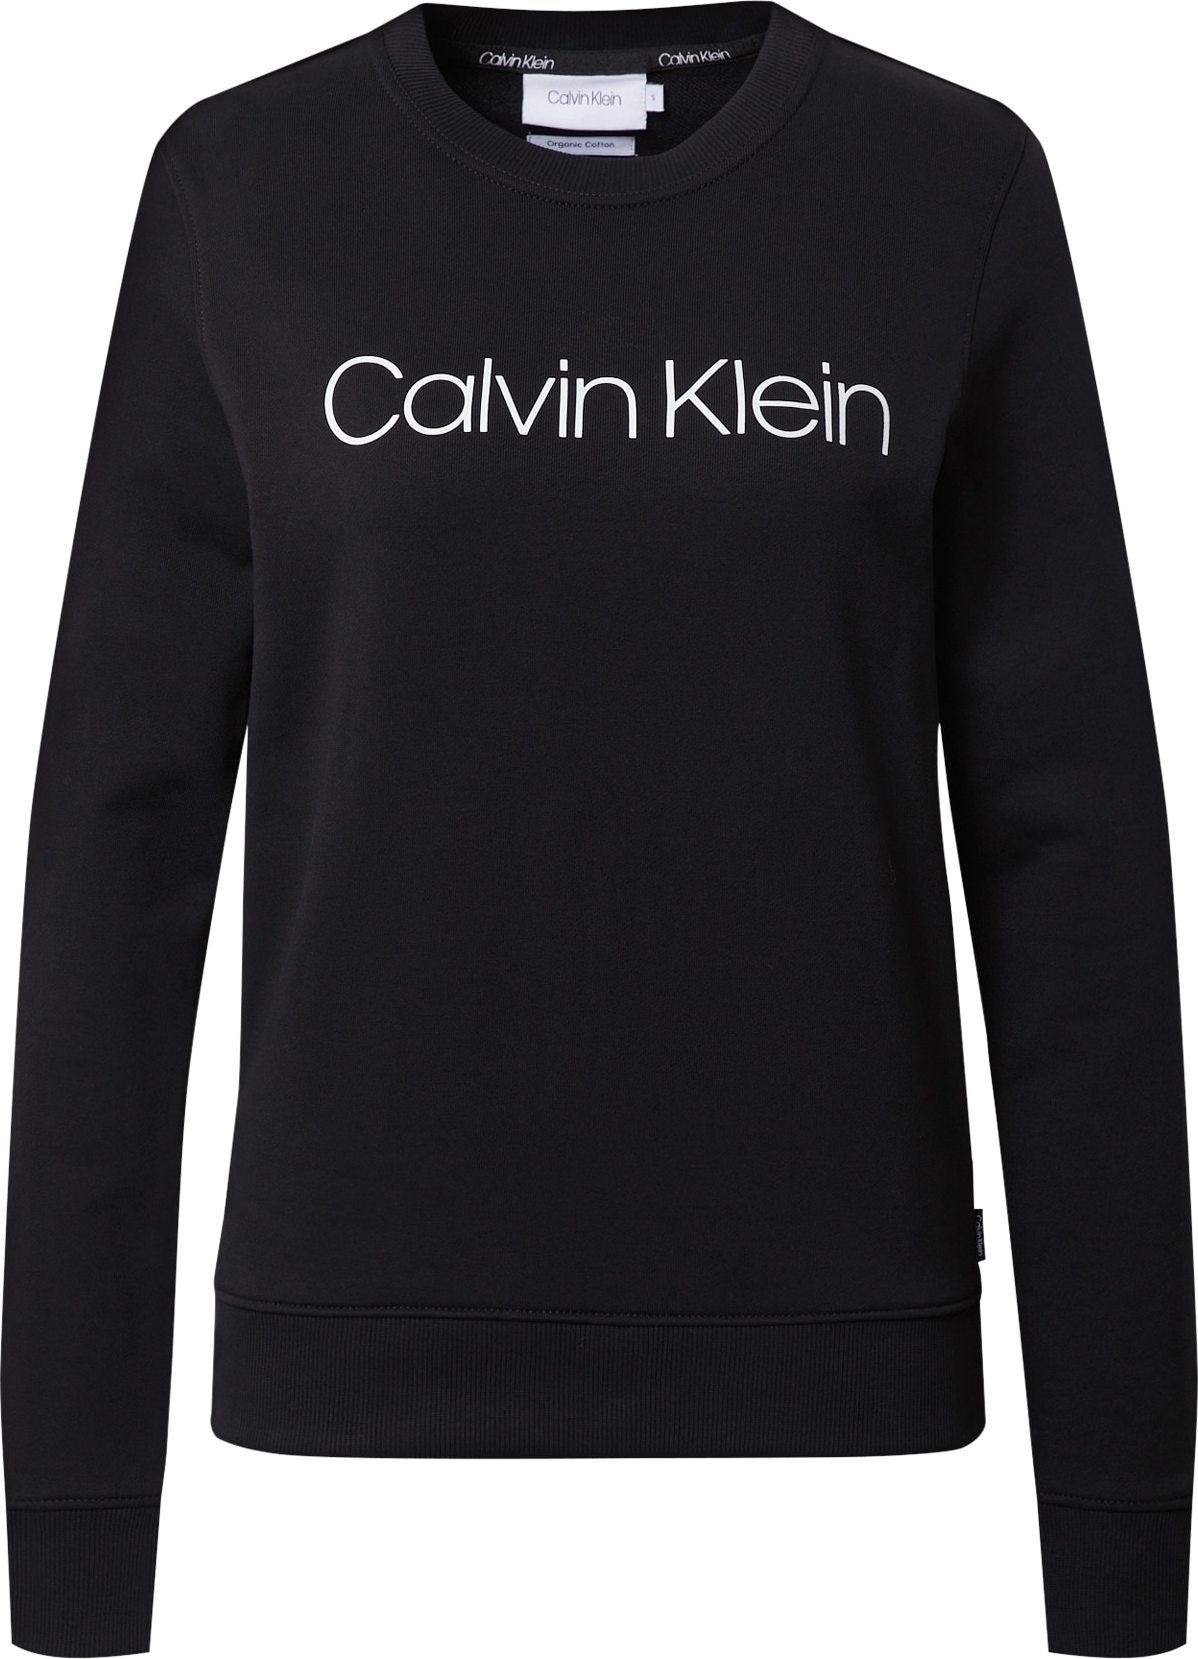 Mikina Calvin Klein černá / bílá